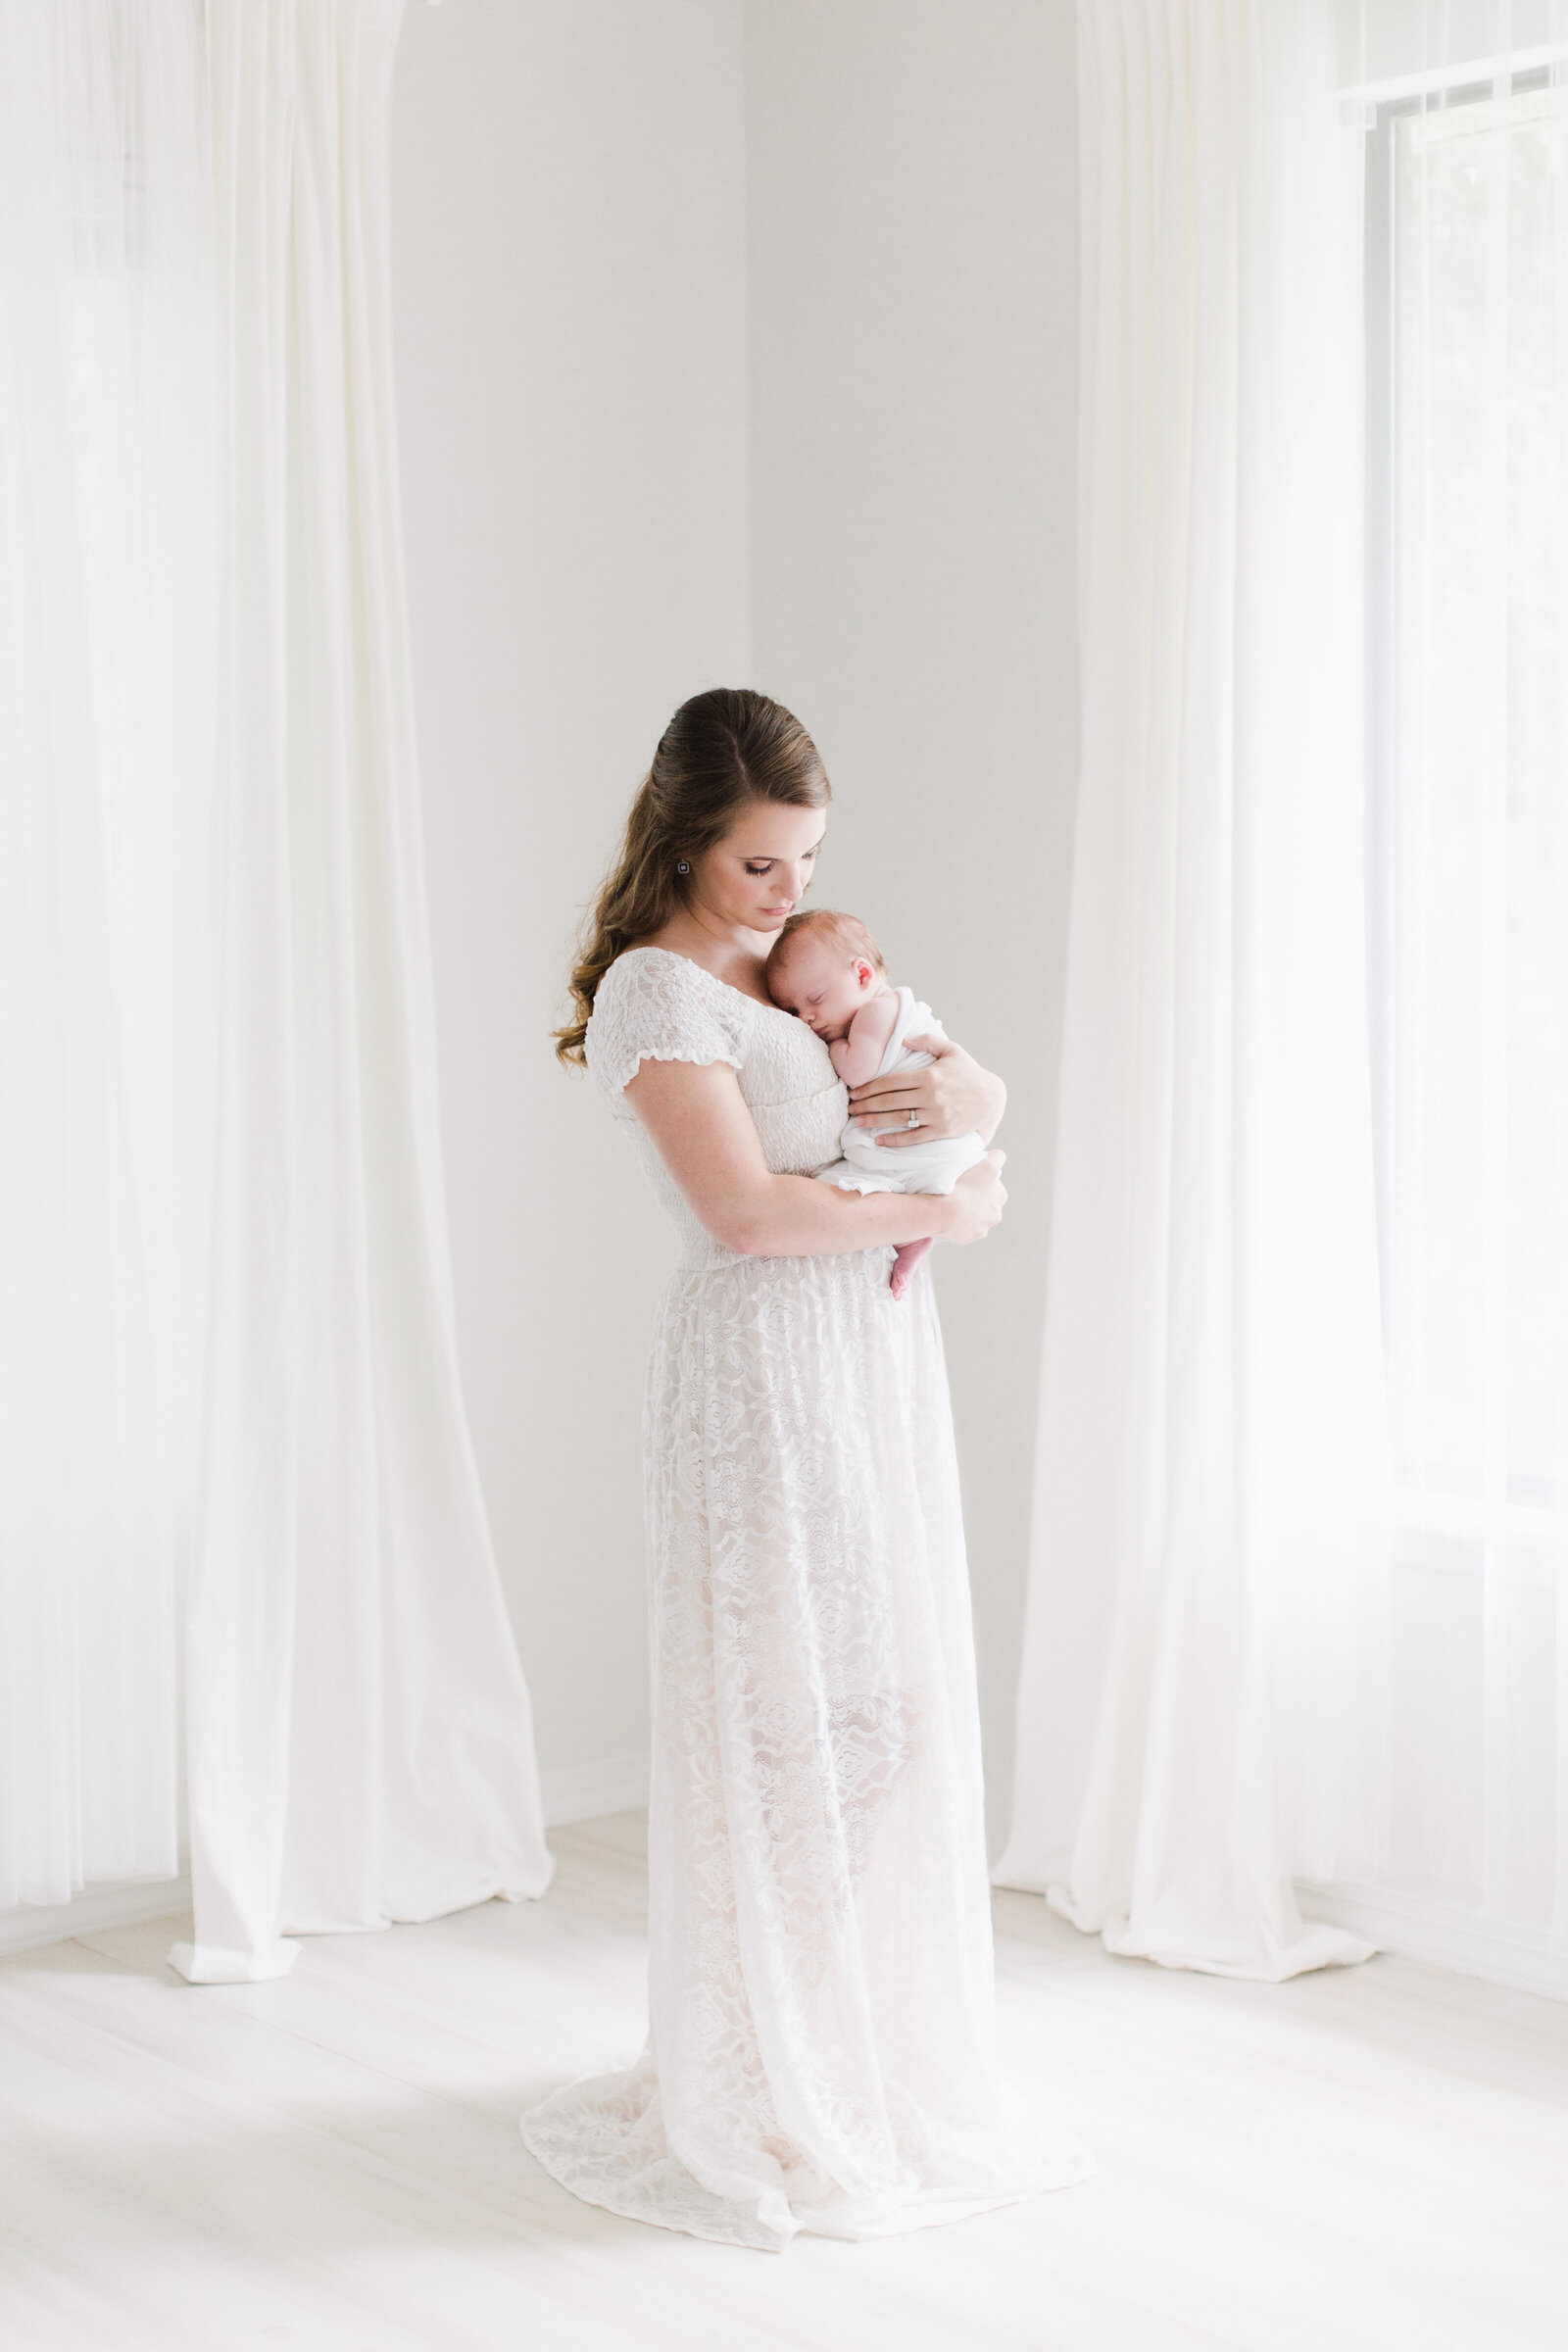 Mom with baby in Bentonville newborn photography studio